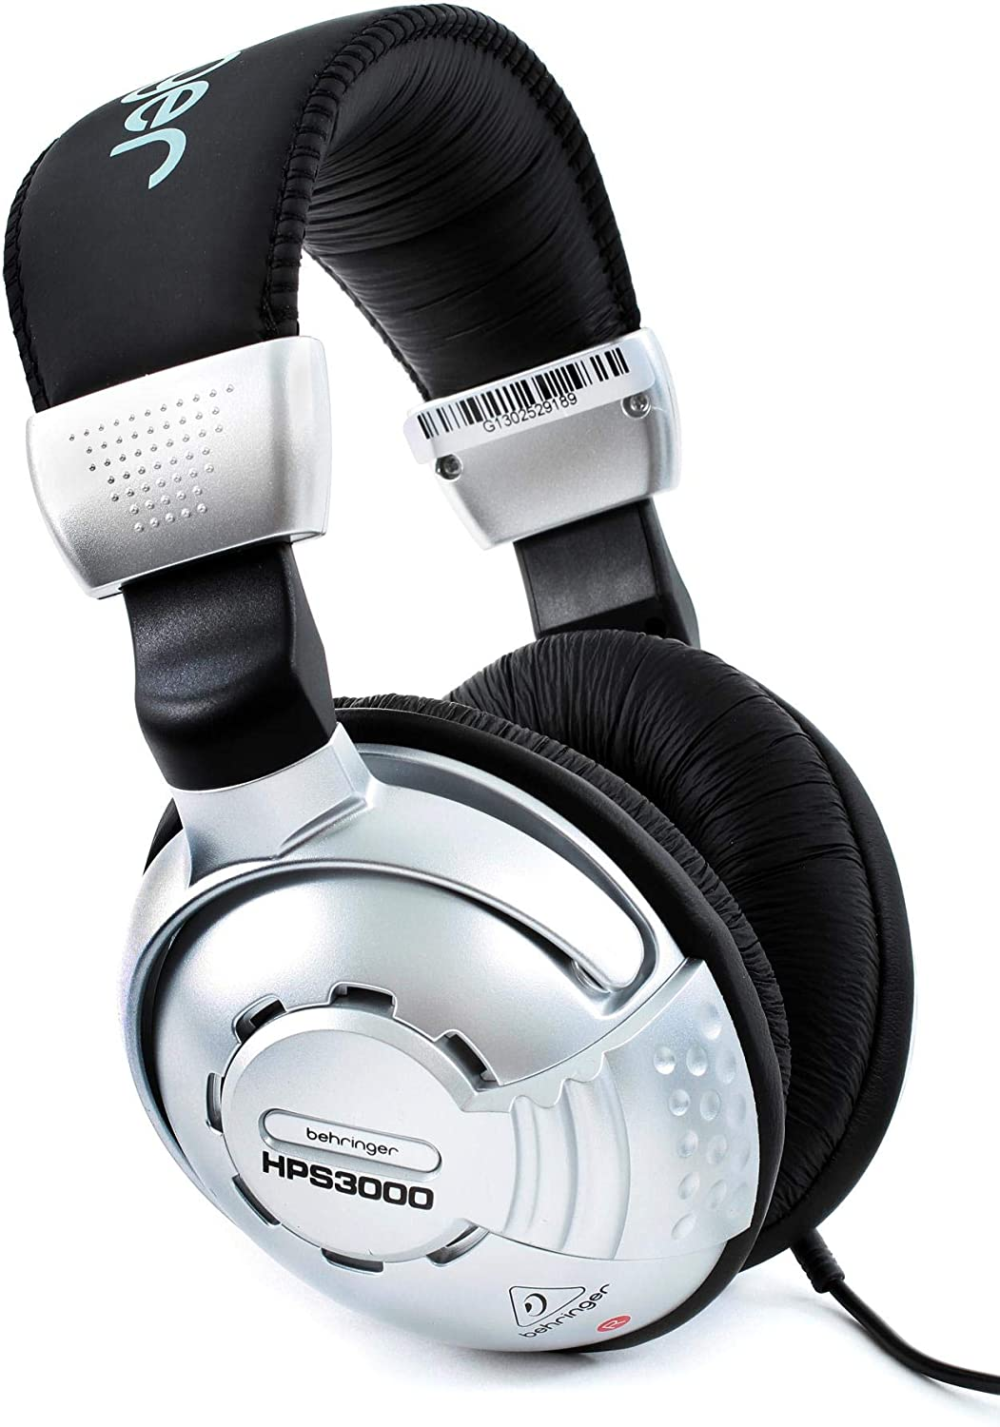 hps3000 high performance studio headphones